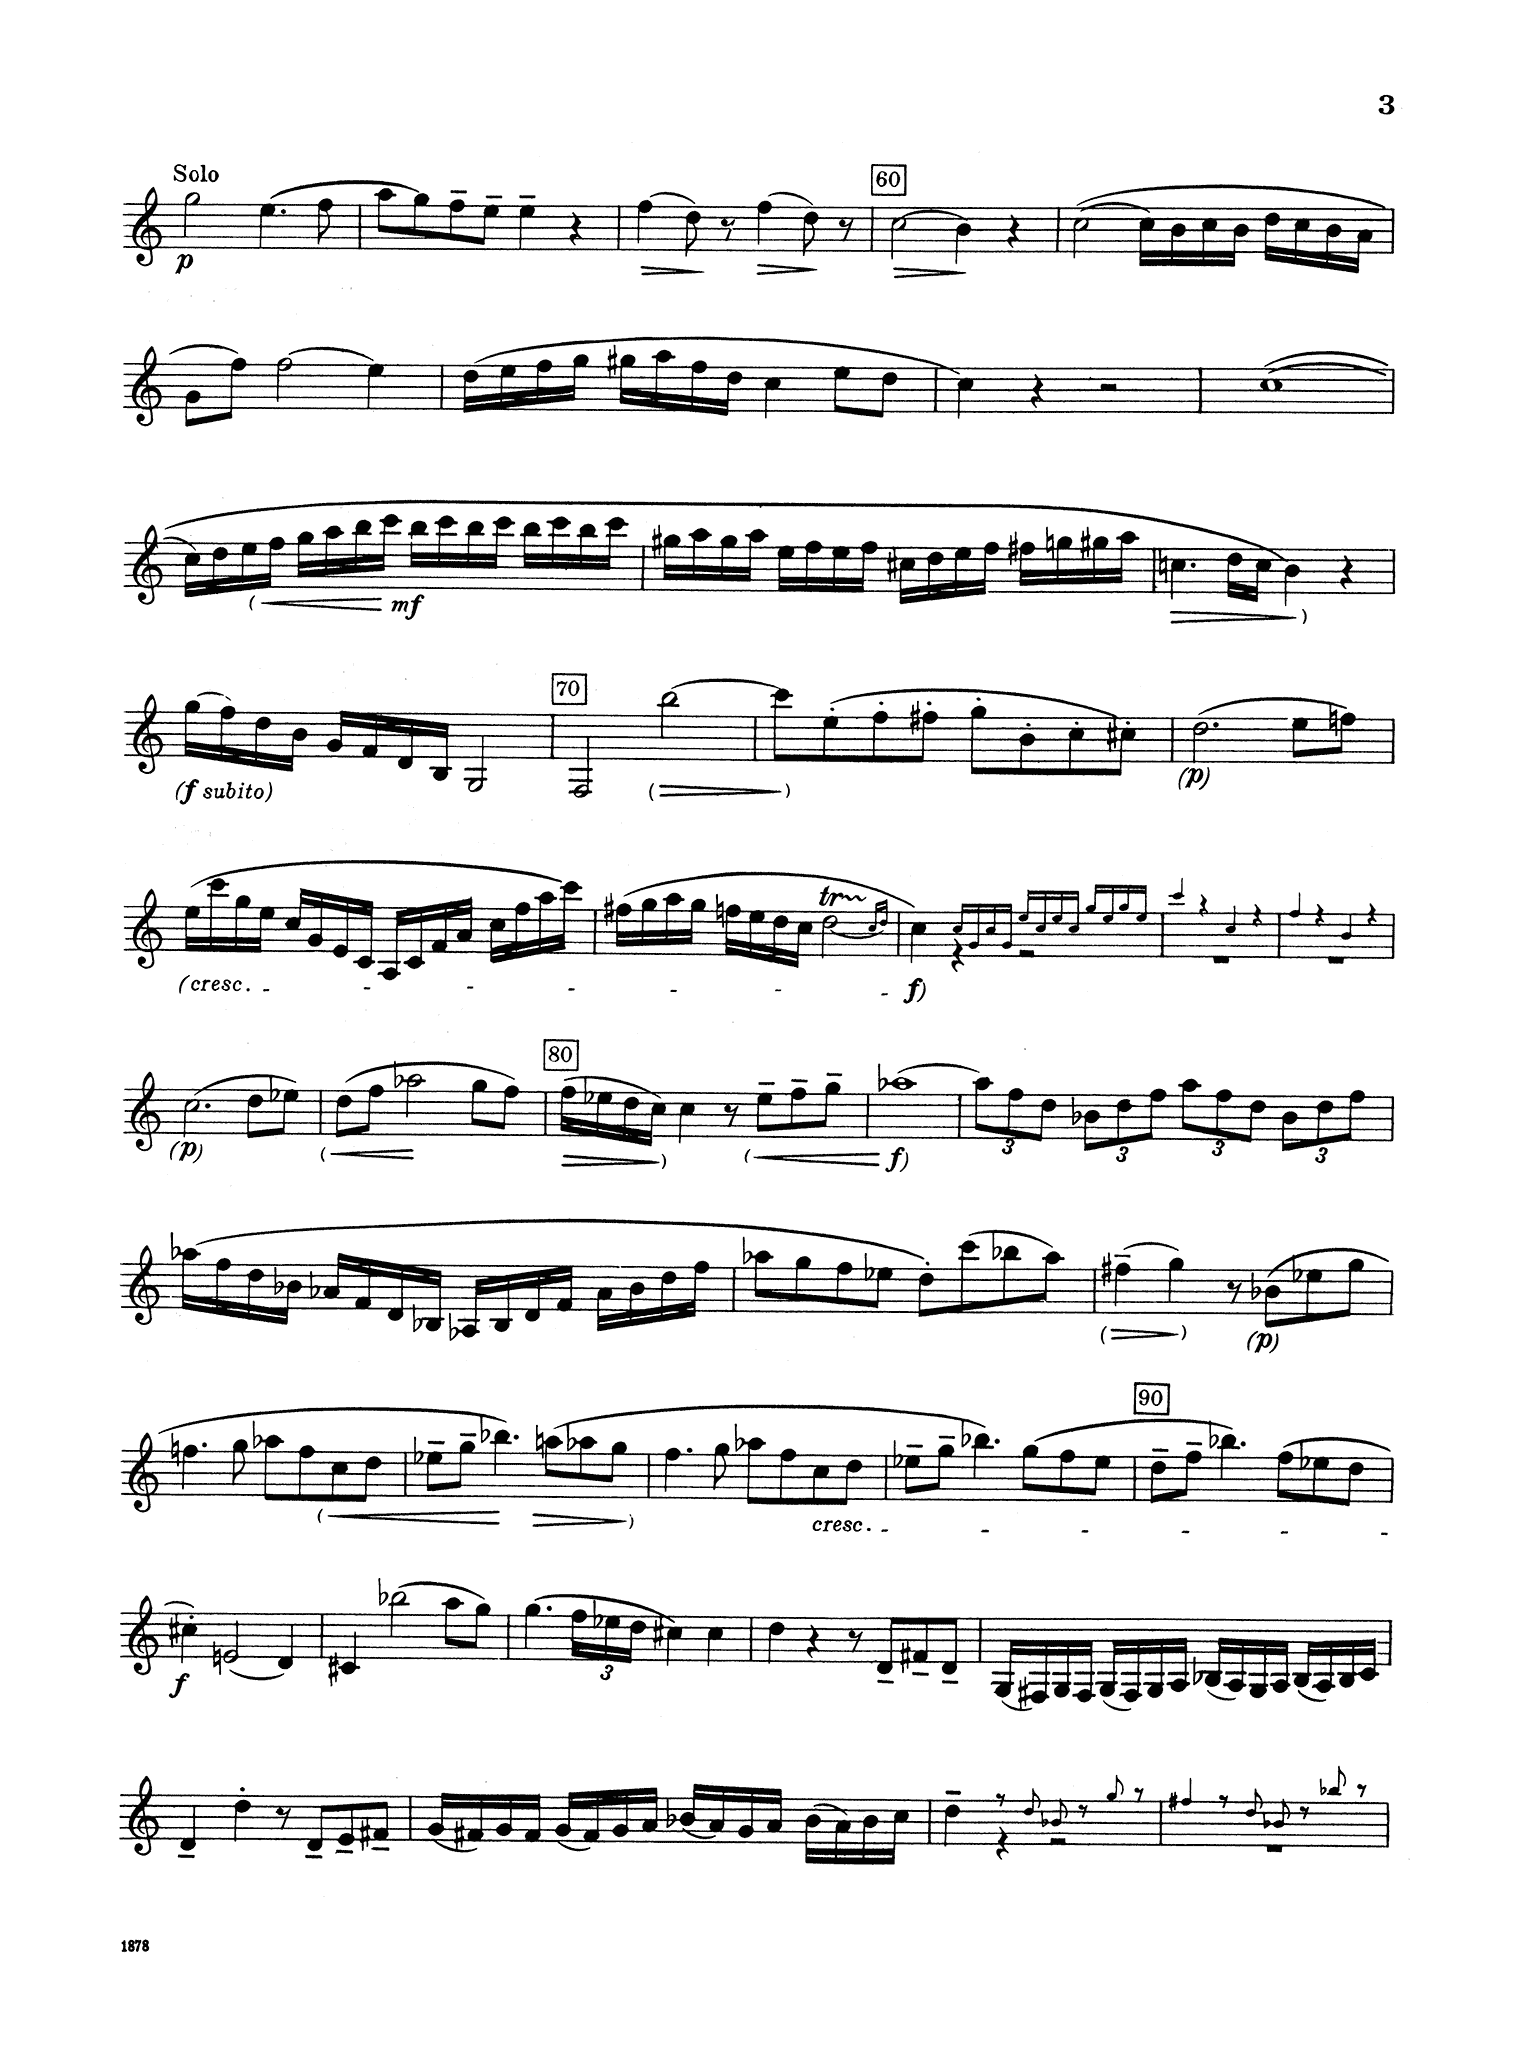 Clarinet Concerto in A Major, K. 622 (B-flat version) Clarinet part